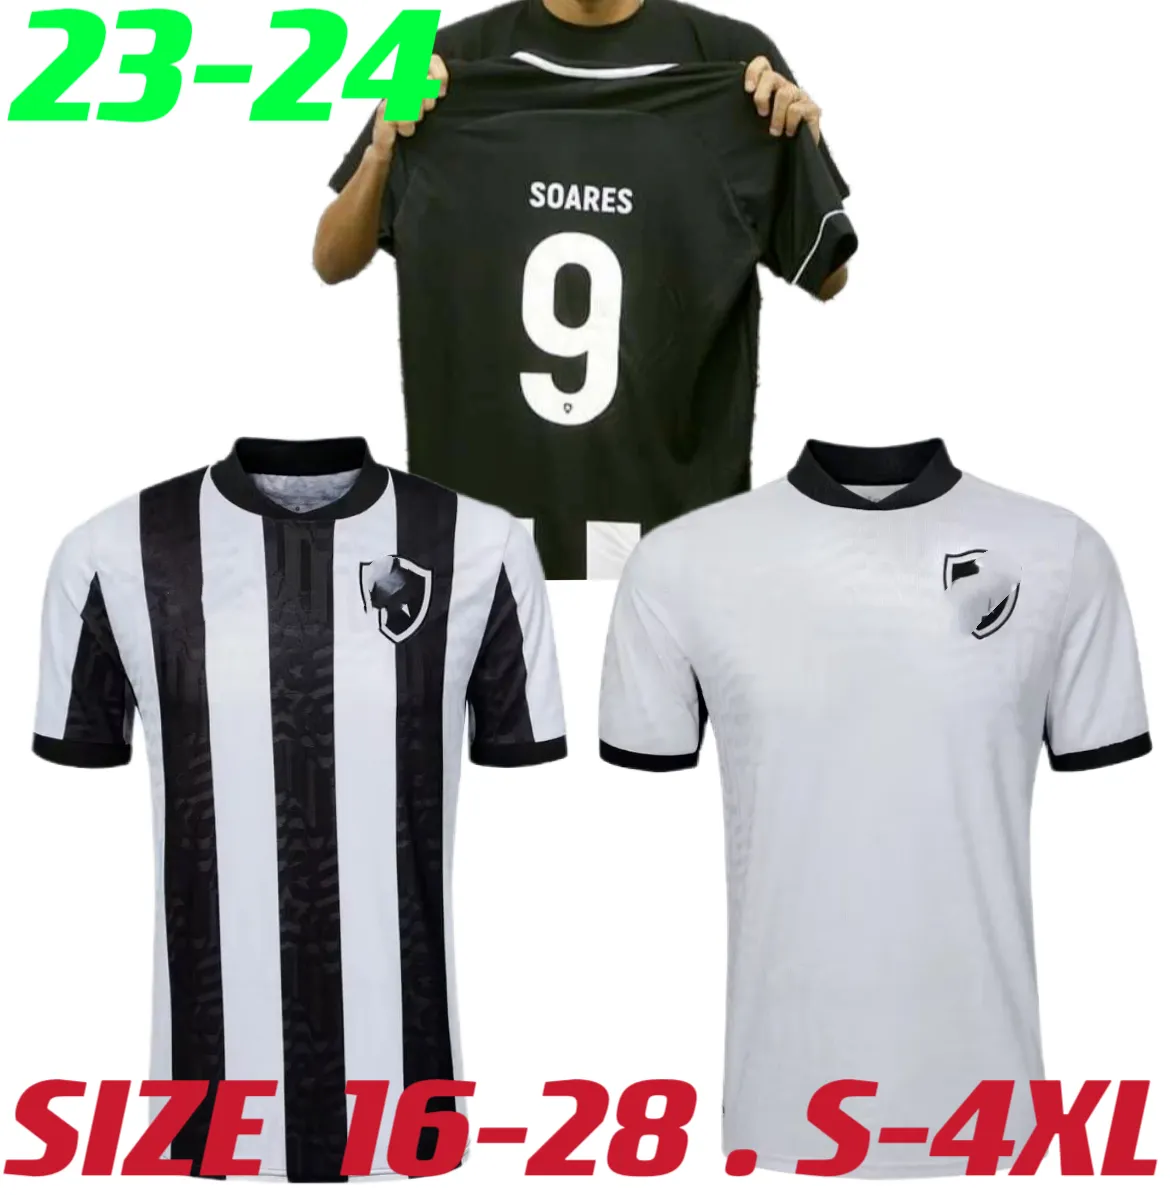 2023 2024 Botafogo Mens Soccer Jerseys 22 23 24 SOARES MATHEUS BABI BERNARDO O.SAUER Home Black and White 3rd Football Shirt Short Sleeve Adult Uniforms Size 16-28 S-4XL